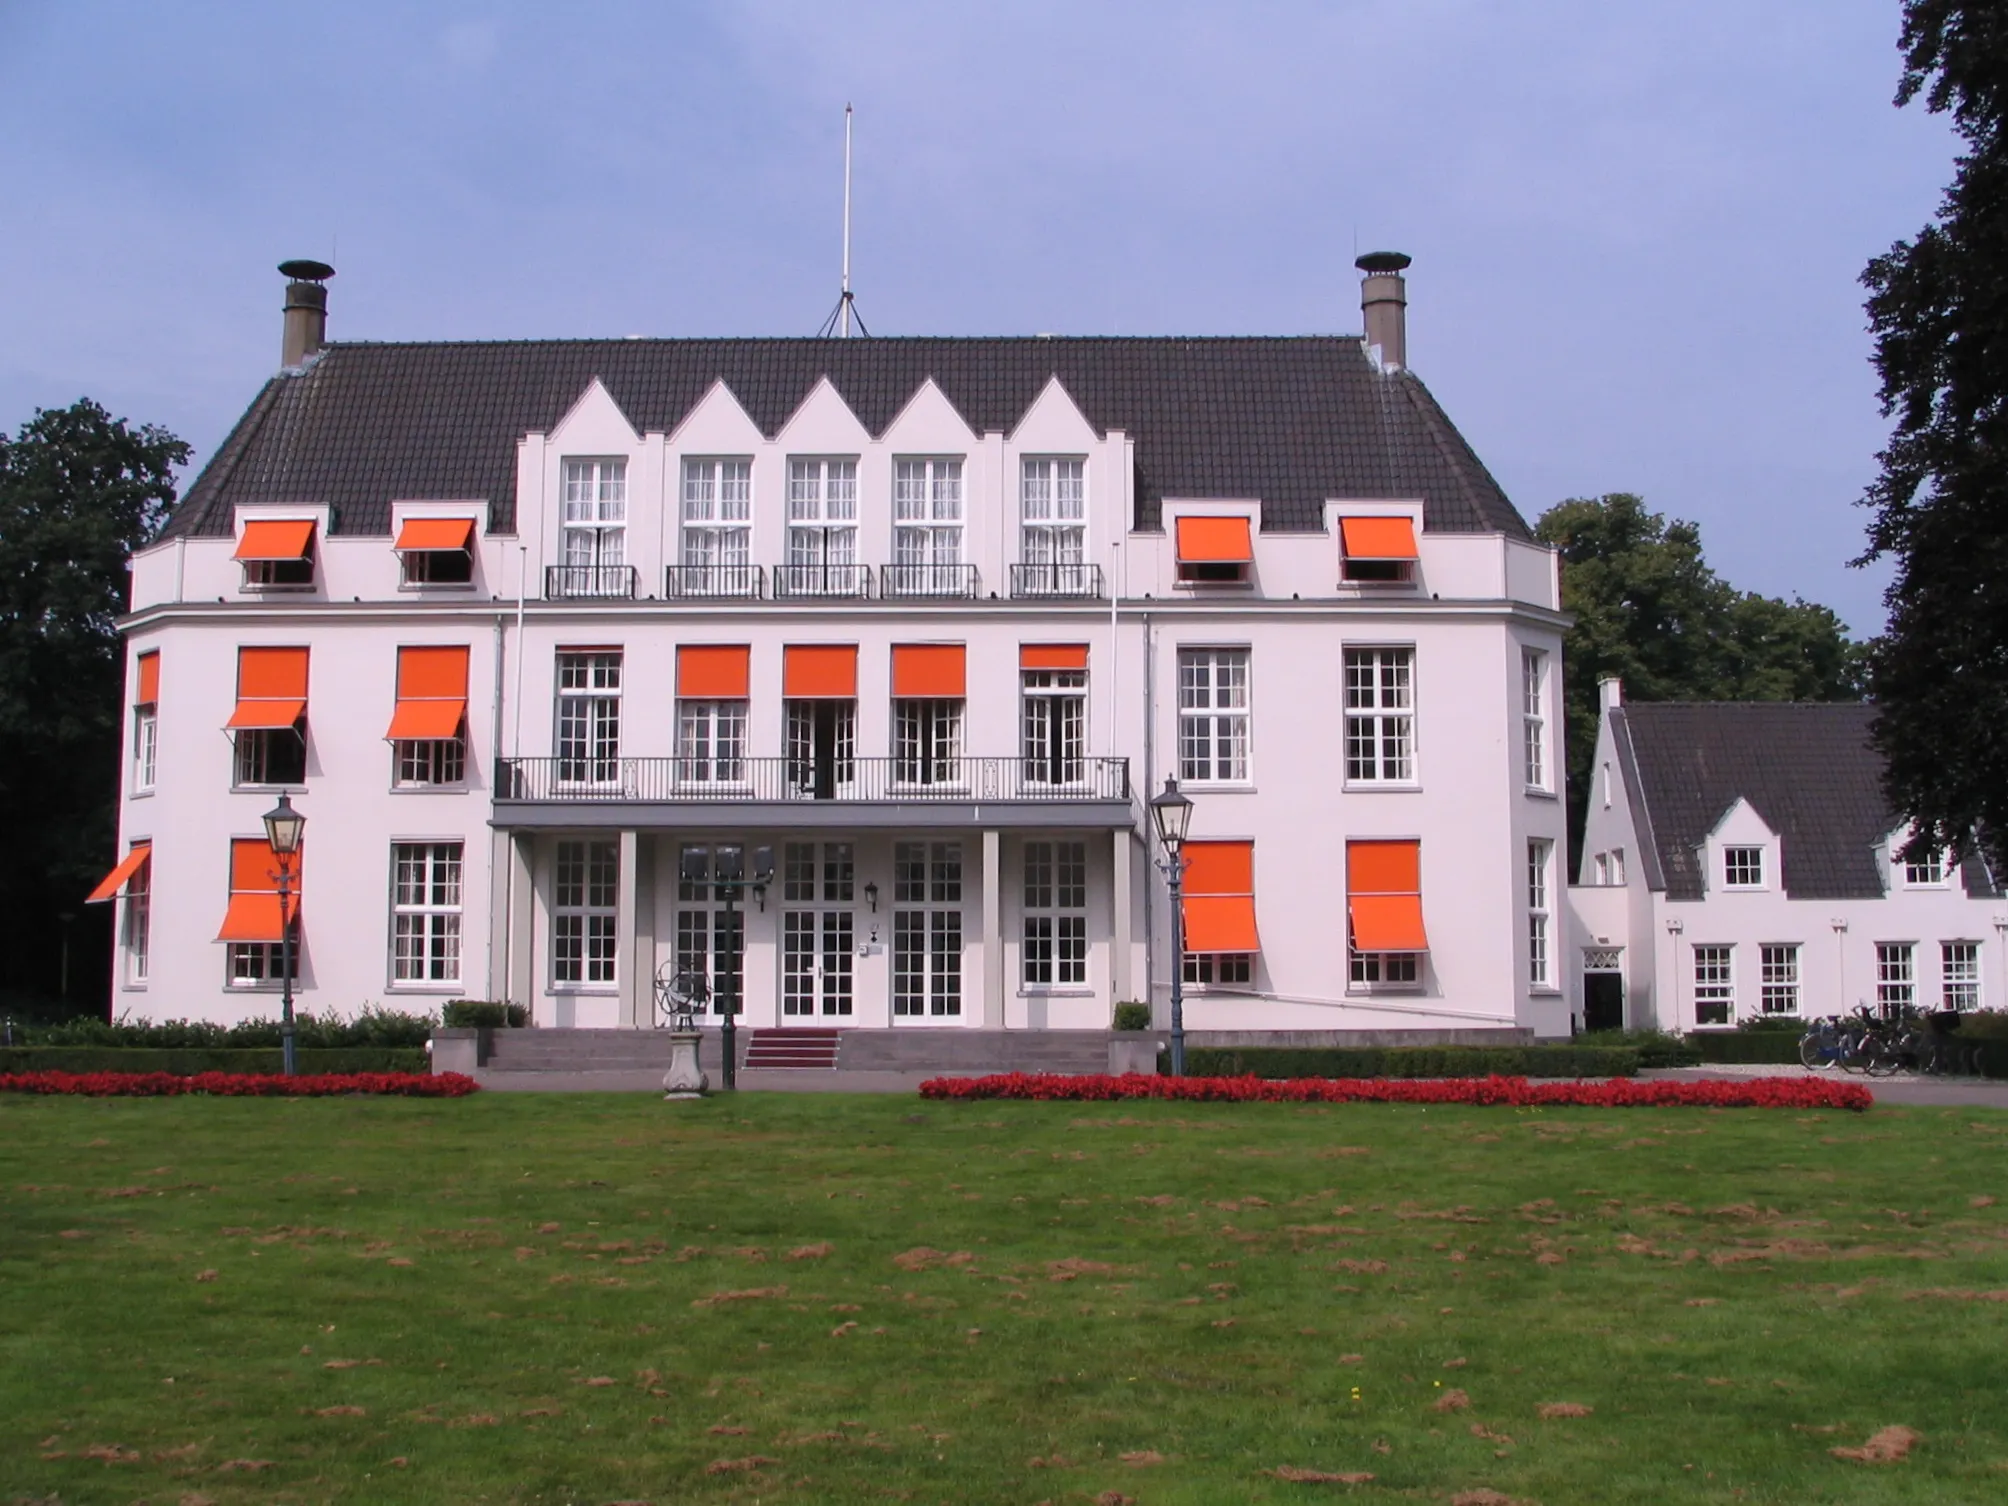 Photo showing: City Hall of Bilthoven, Soestdijkseweg Zuid 173, Bilthoven (municipality De Bilt). Date: August 2012. Front of the building.